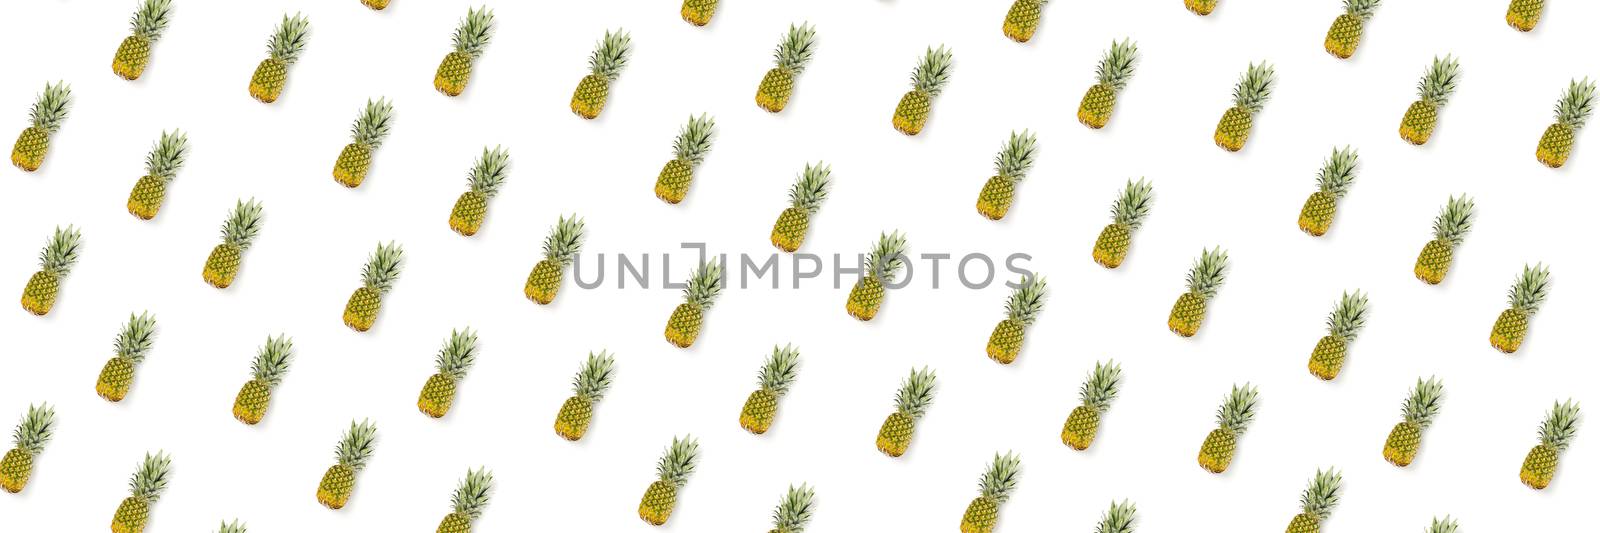 Pineapple set on white background. isolated pineapple on white background. Flat lay made from ananas.